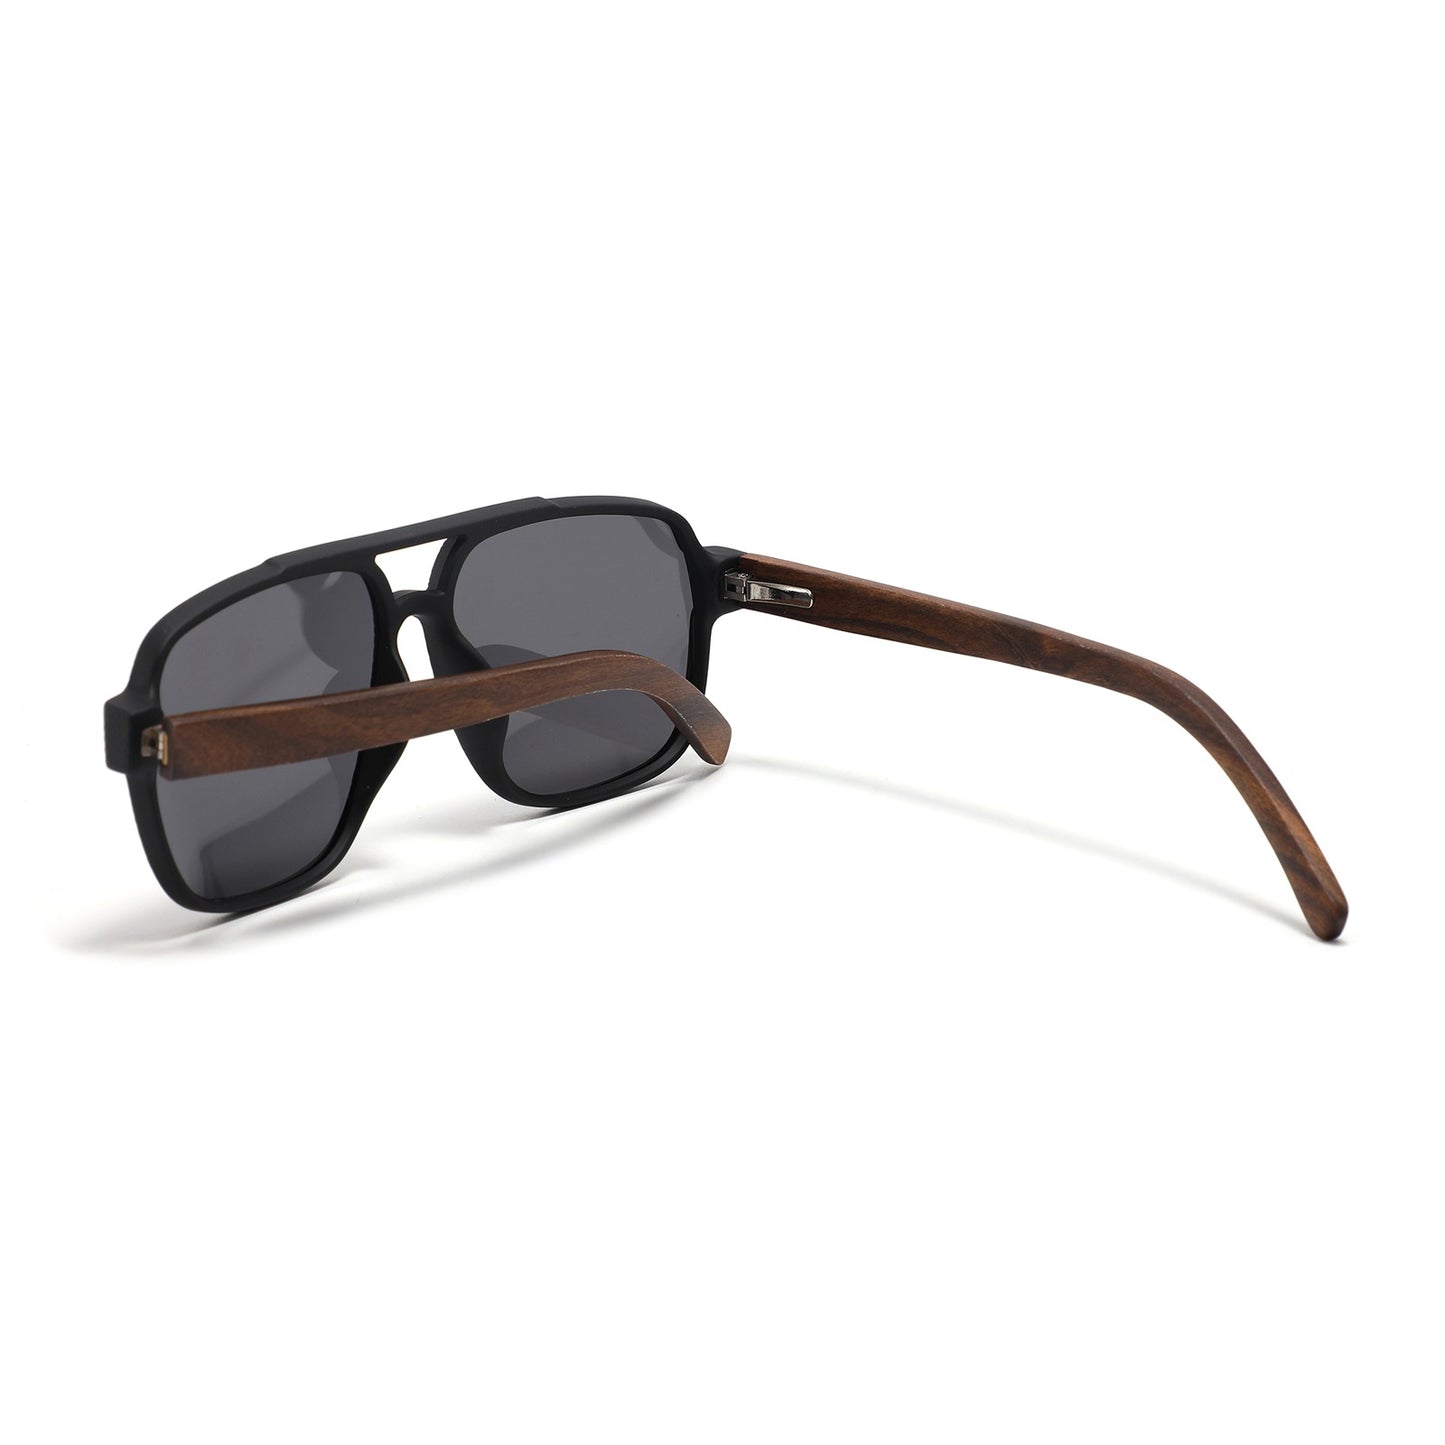 REMI BLACK Sunglasses Polarised Lens Wooden Arms